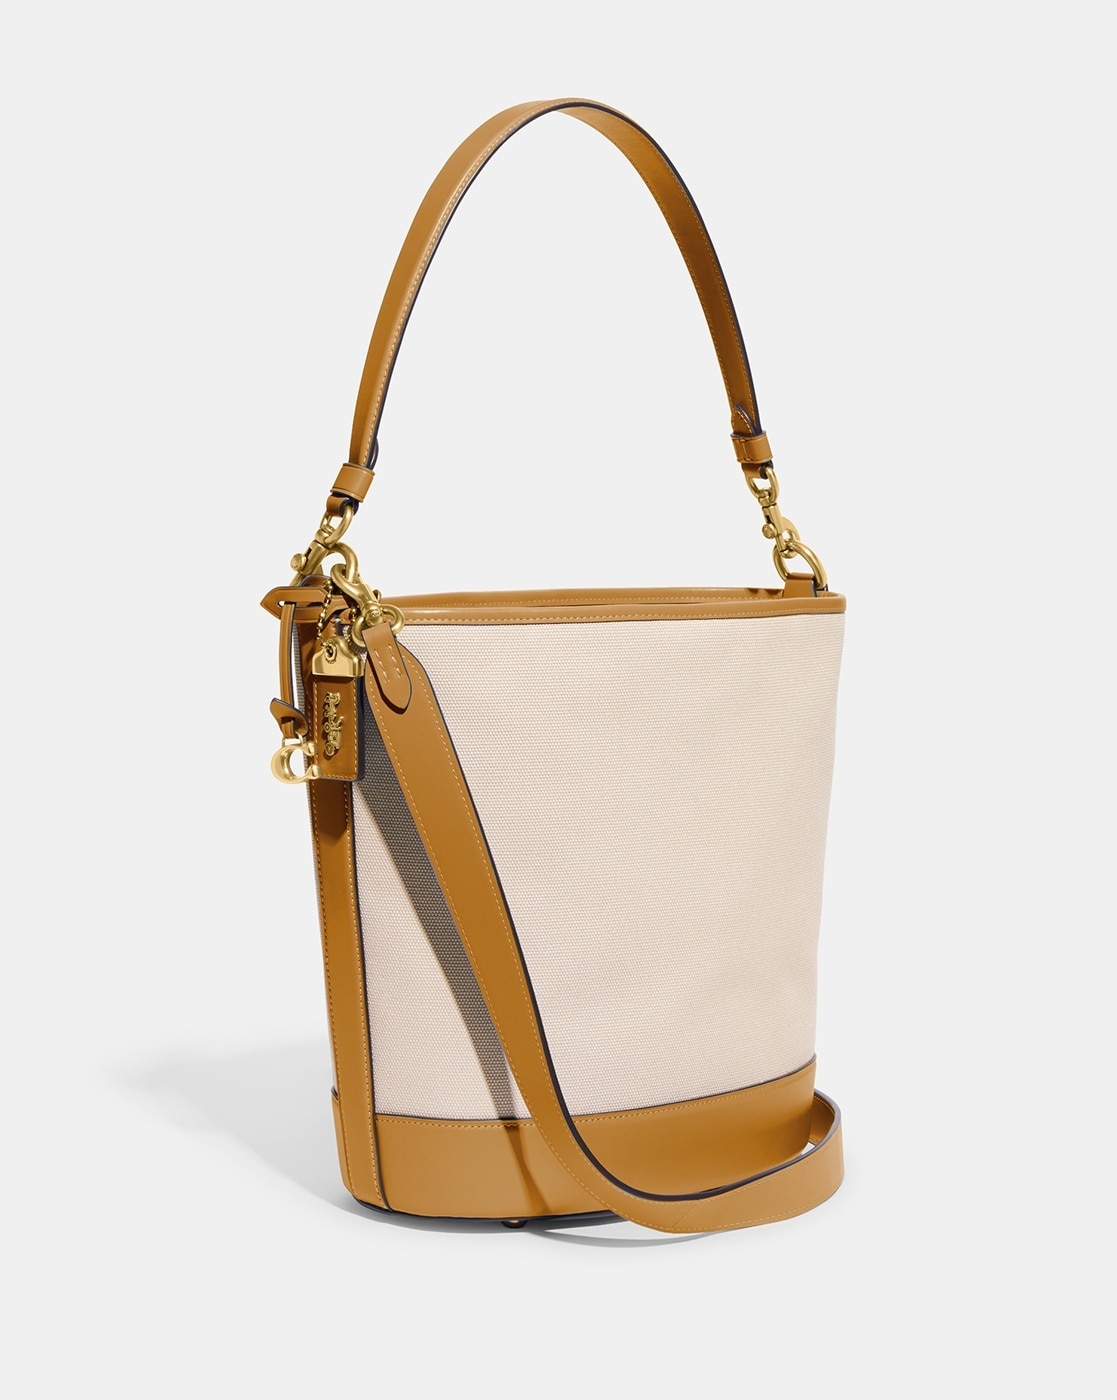 Willow Bucket Bag | COACH | Shoulder bag outfit, Bucket bag, Bags